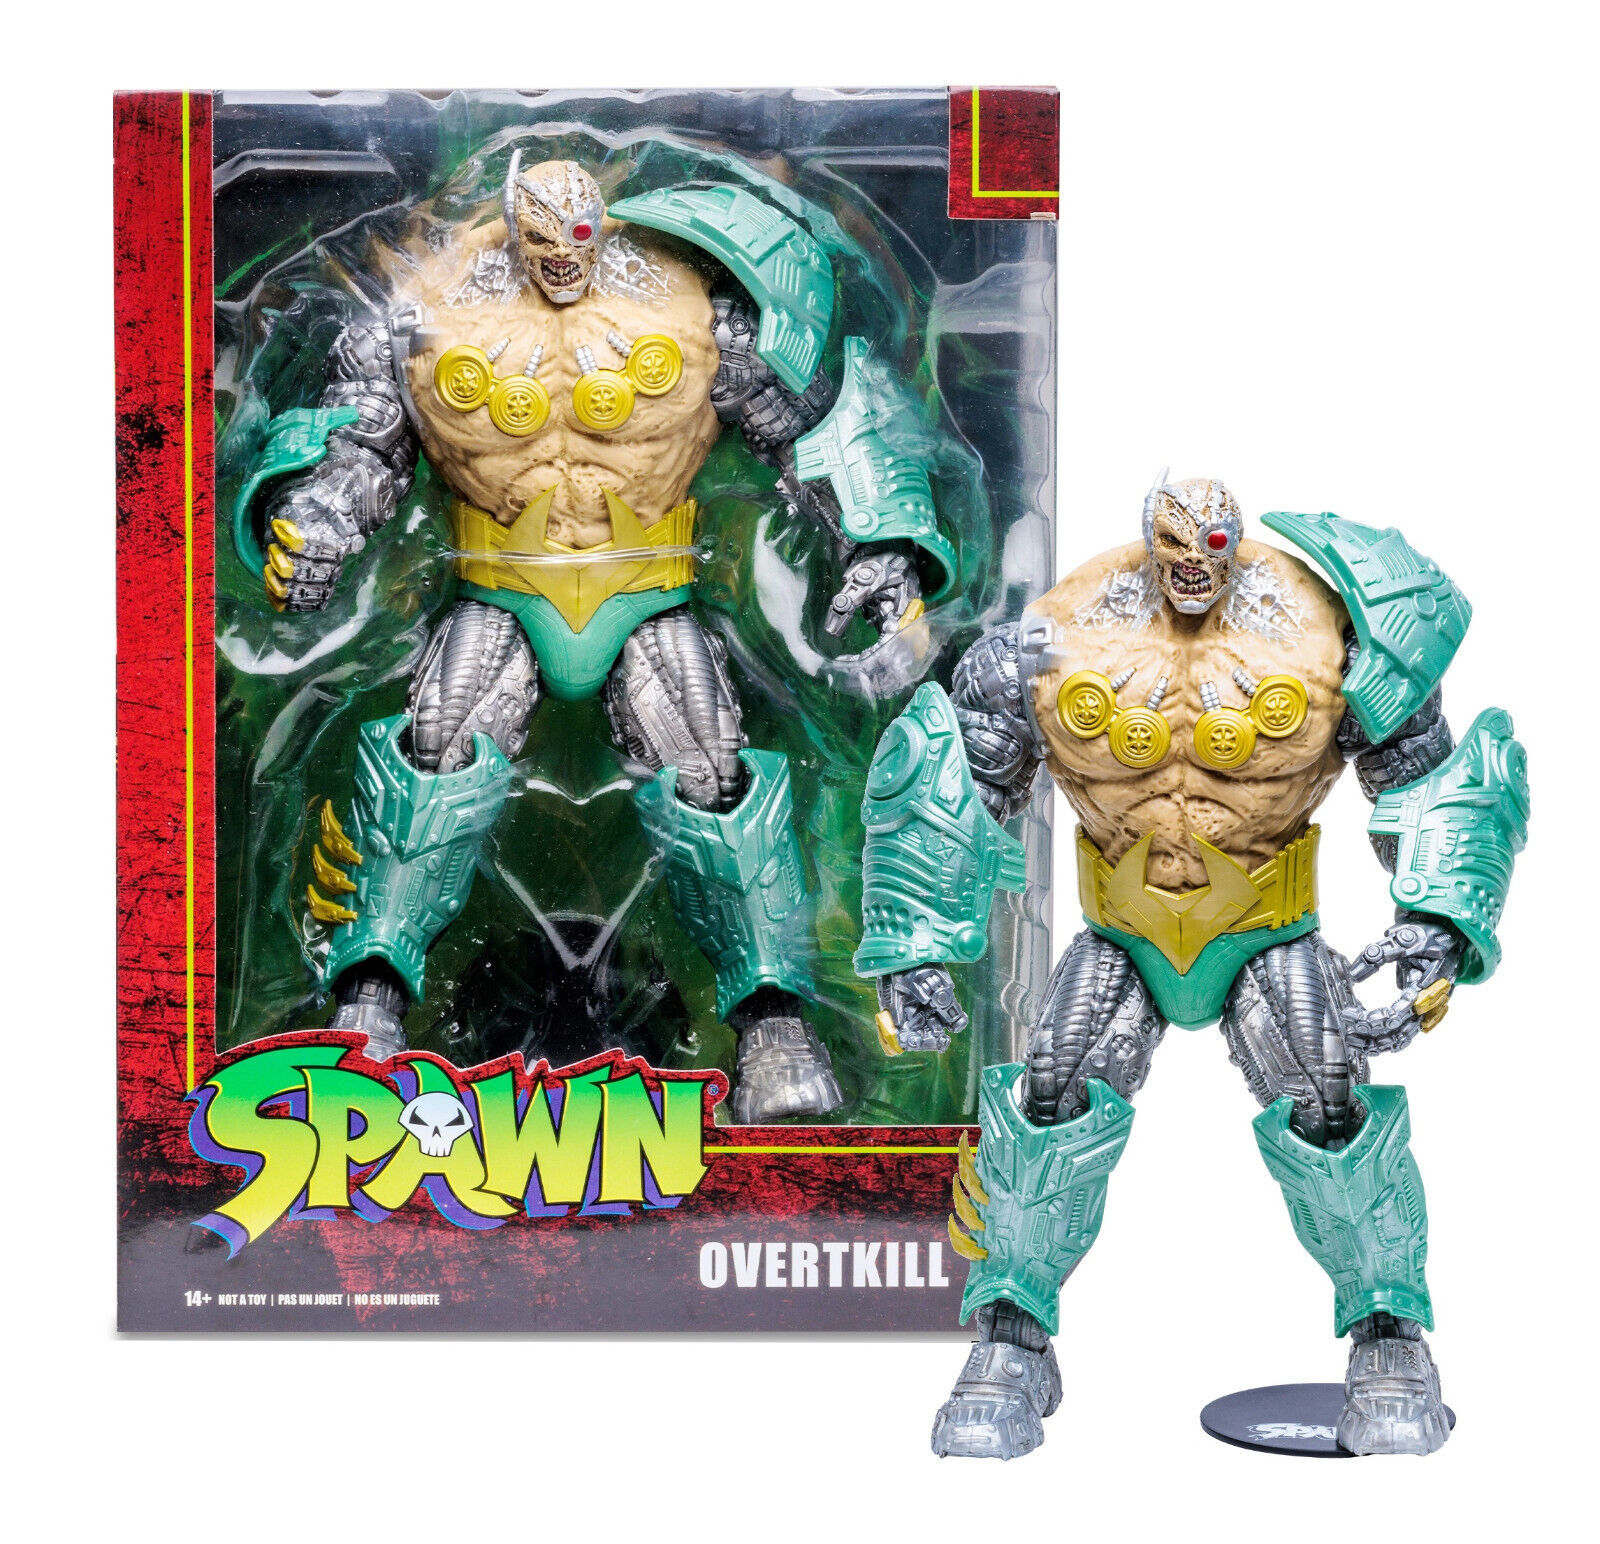 McFarlane Toys Spawn Overtkill Mega Figure 10" Action Figure New in Box - $29.88